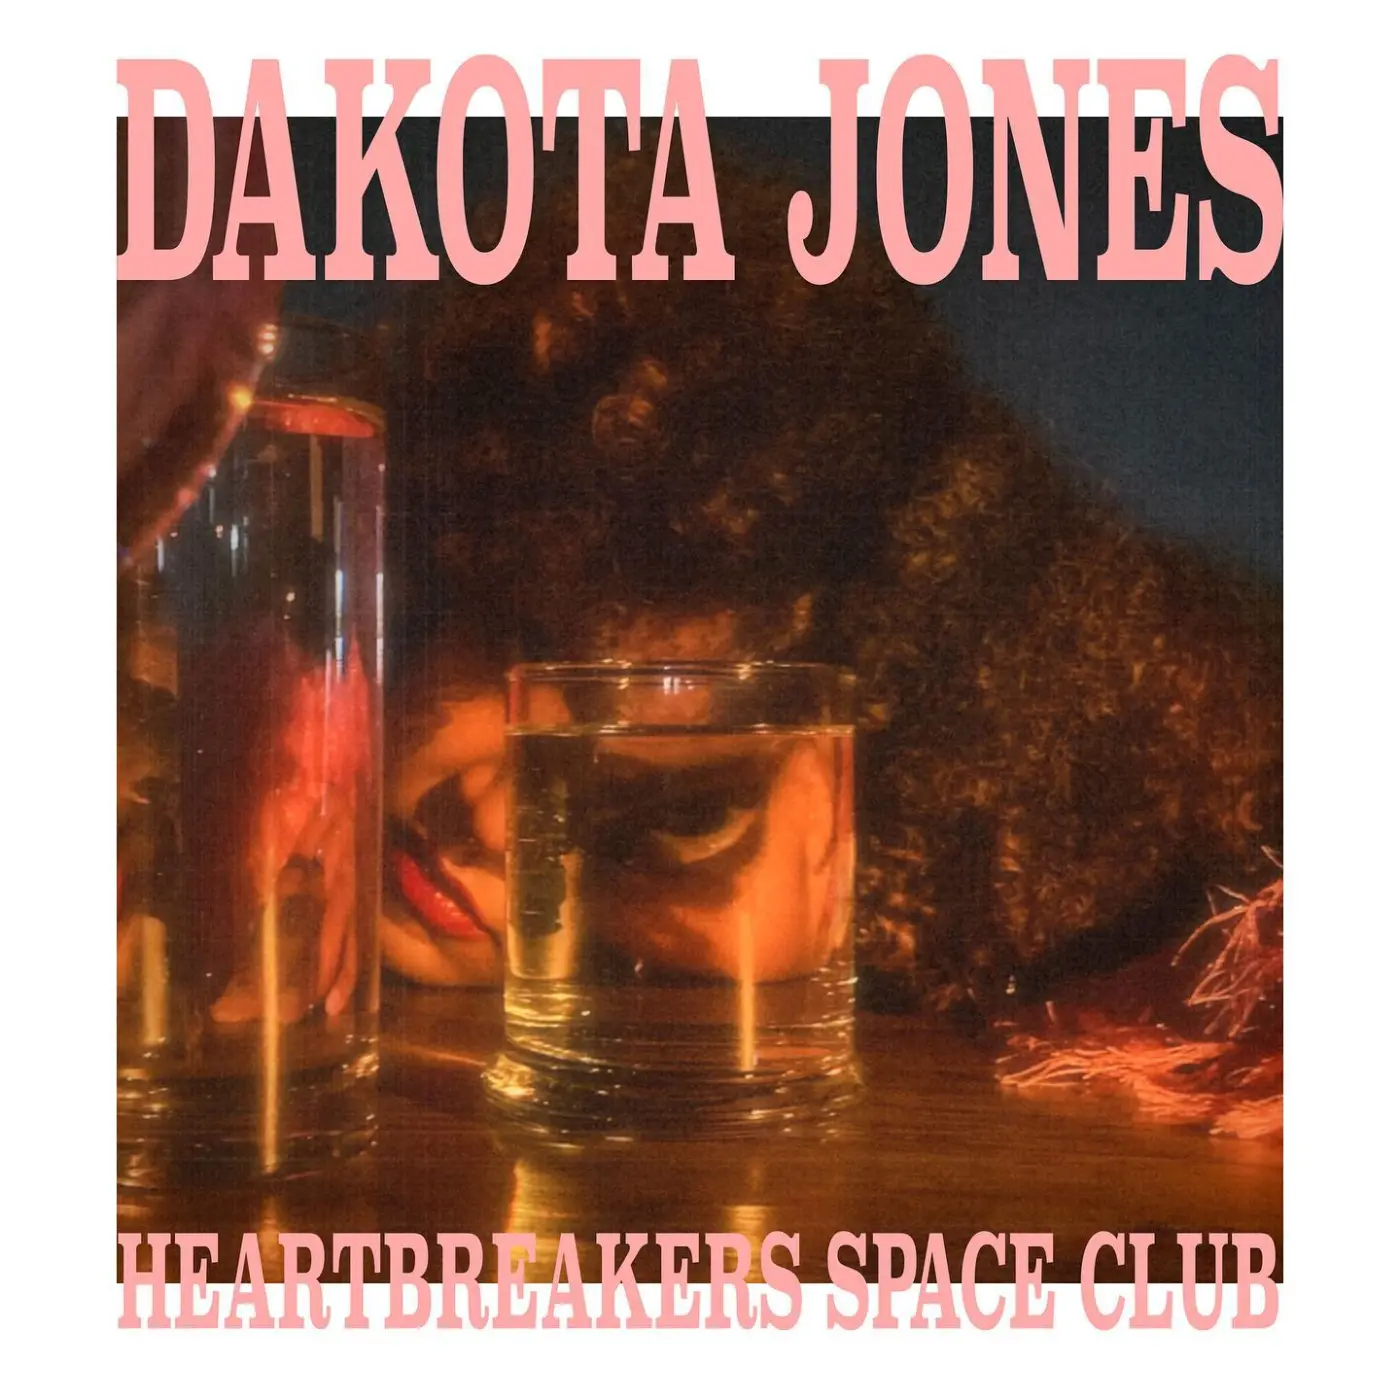 Recenzja albumu: Heartbreakers Space Club // Dakota Jones: The Independent